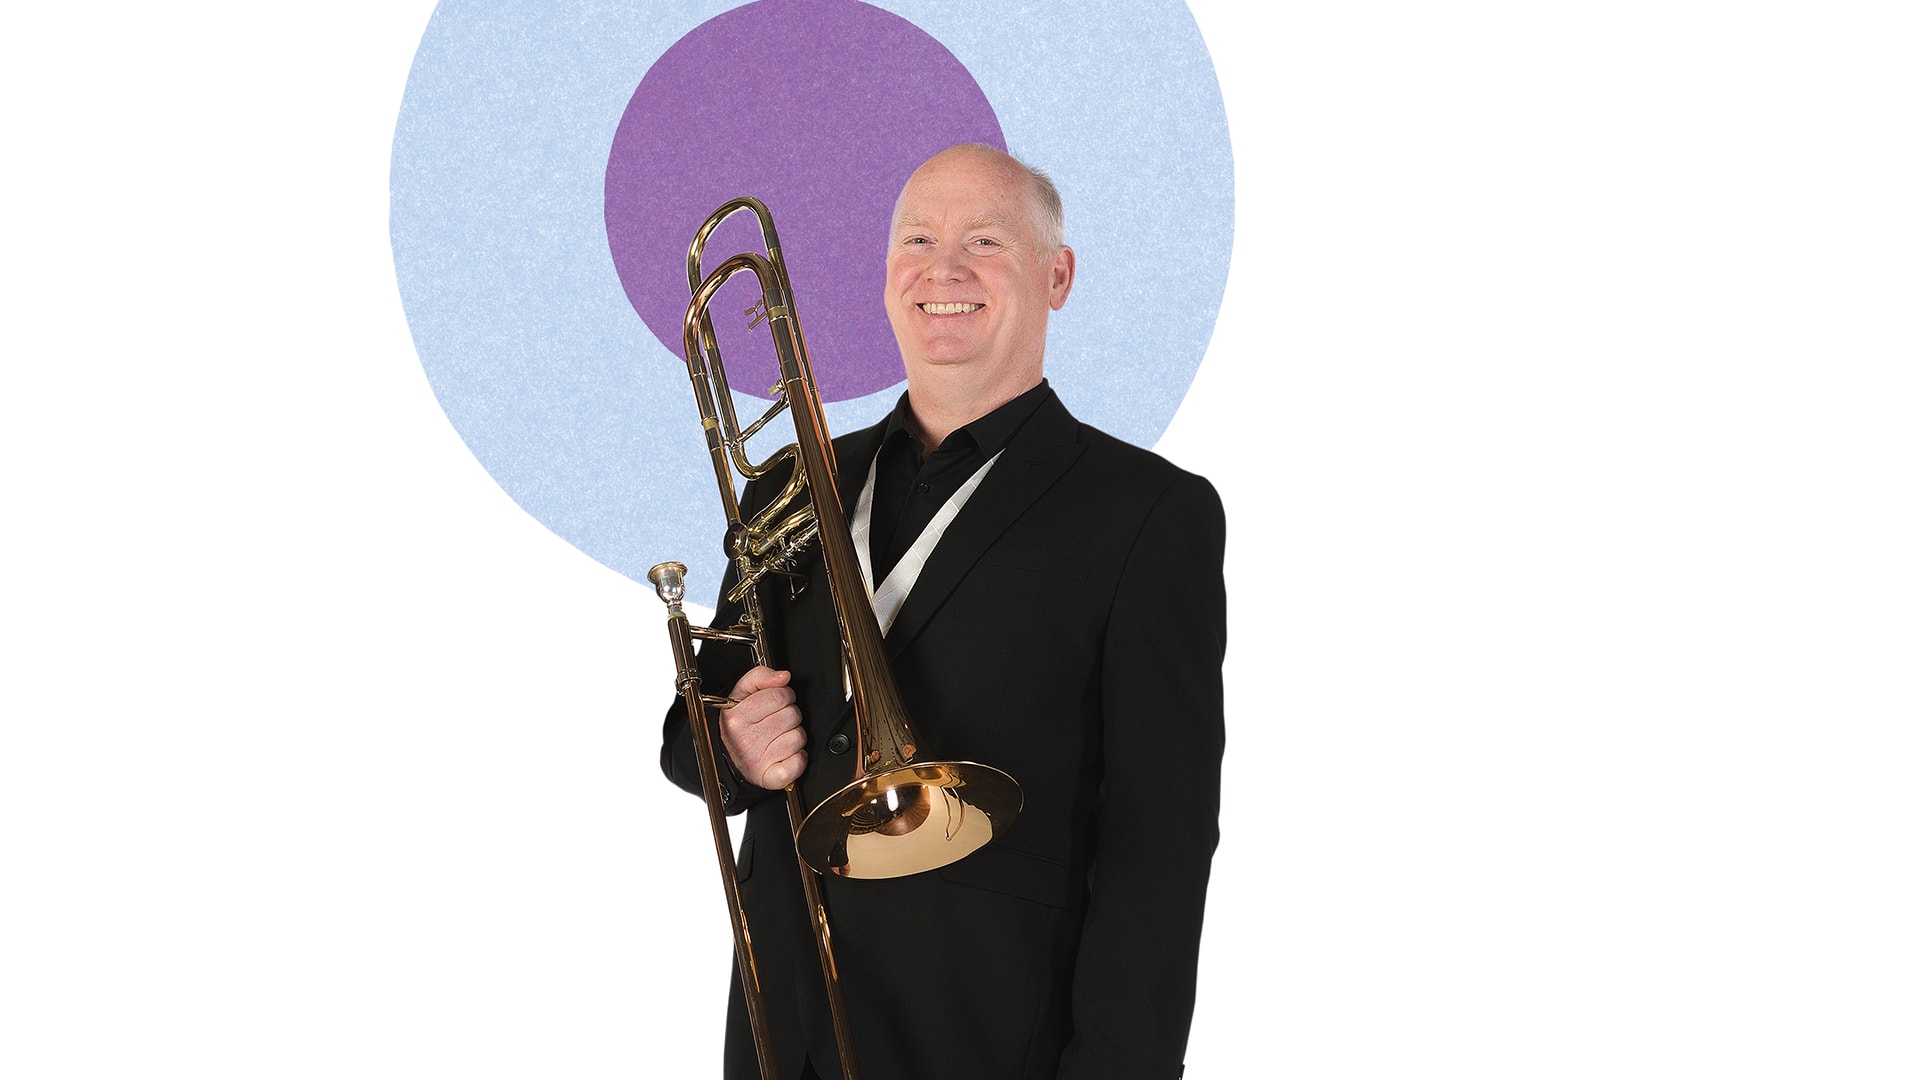 BSO Trombone player